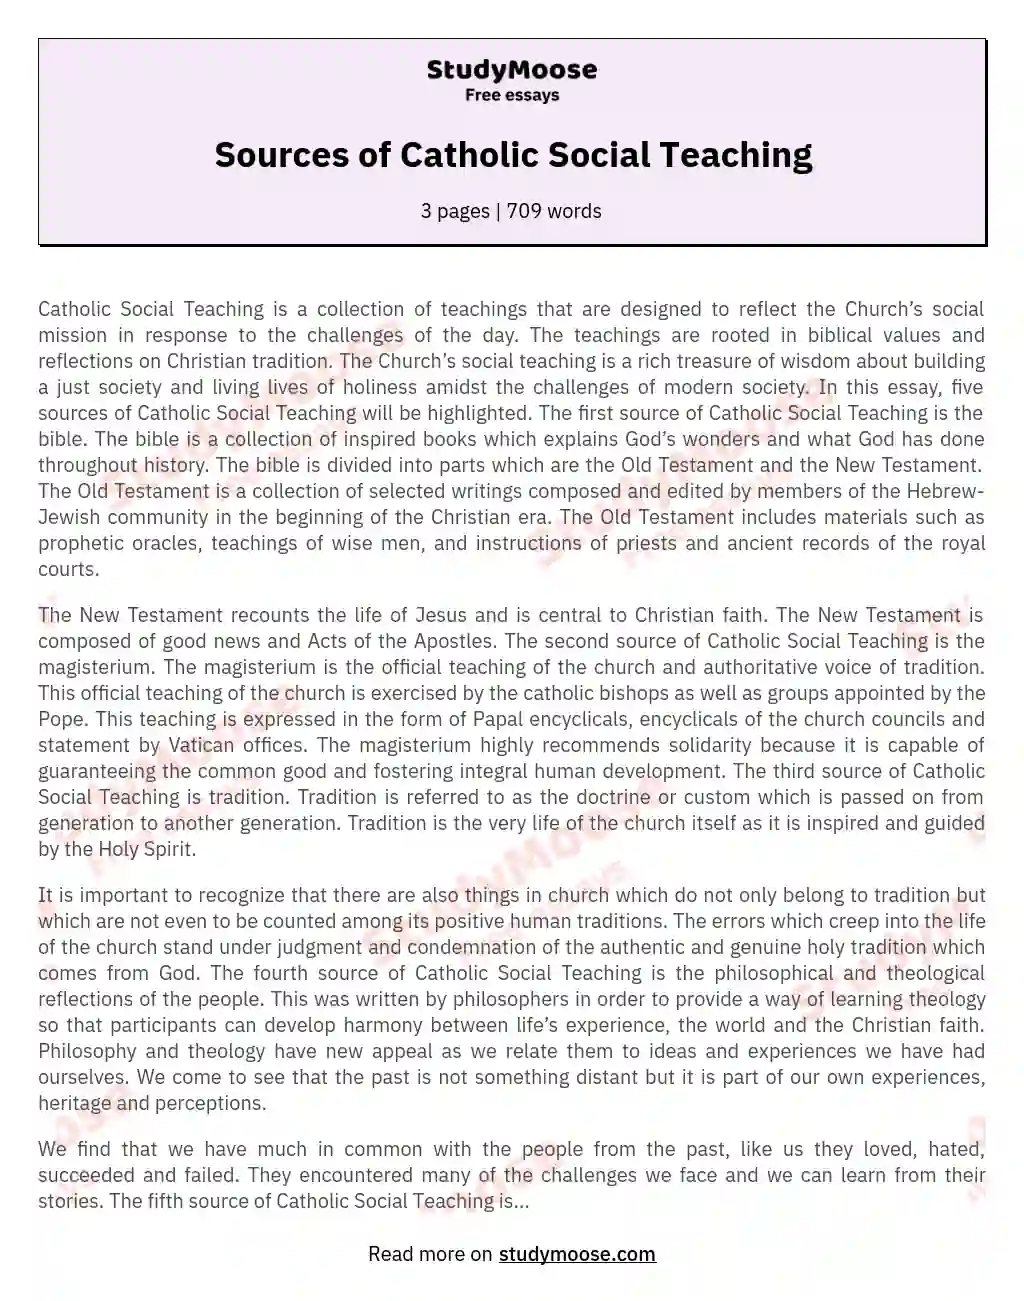 Sources of Catholic Social Teaching essay